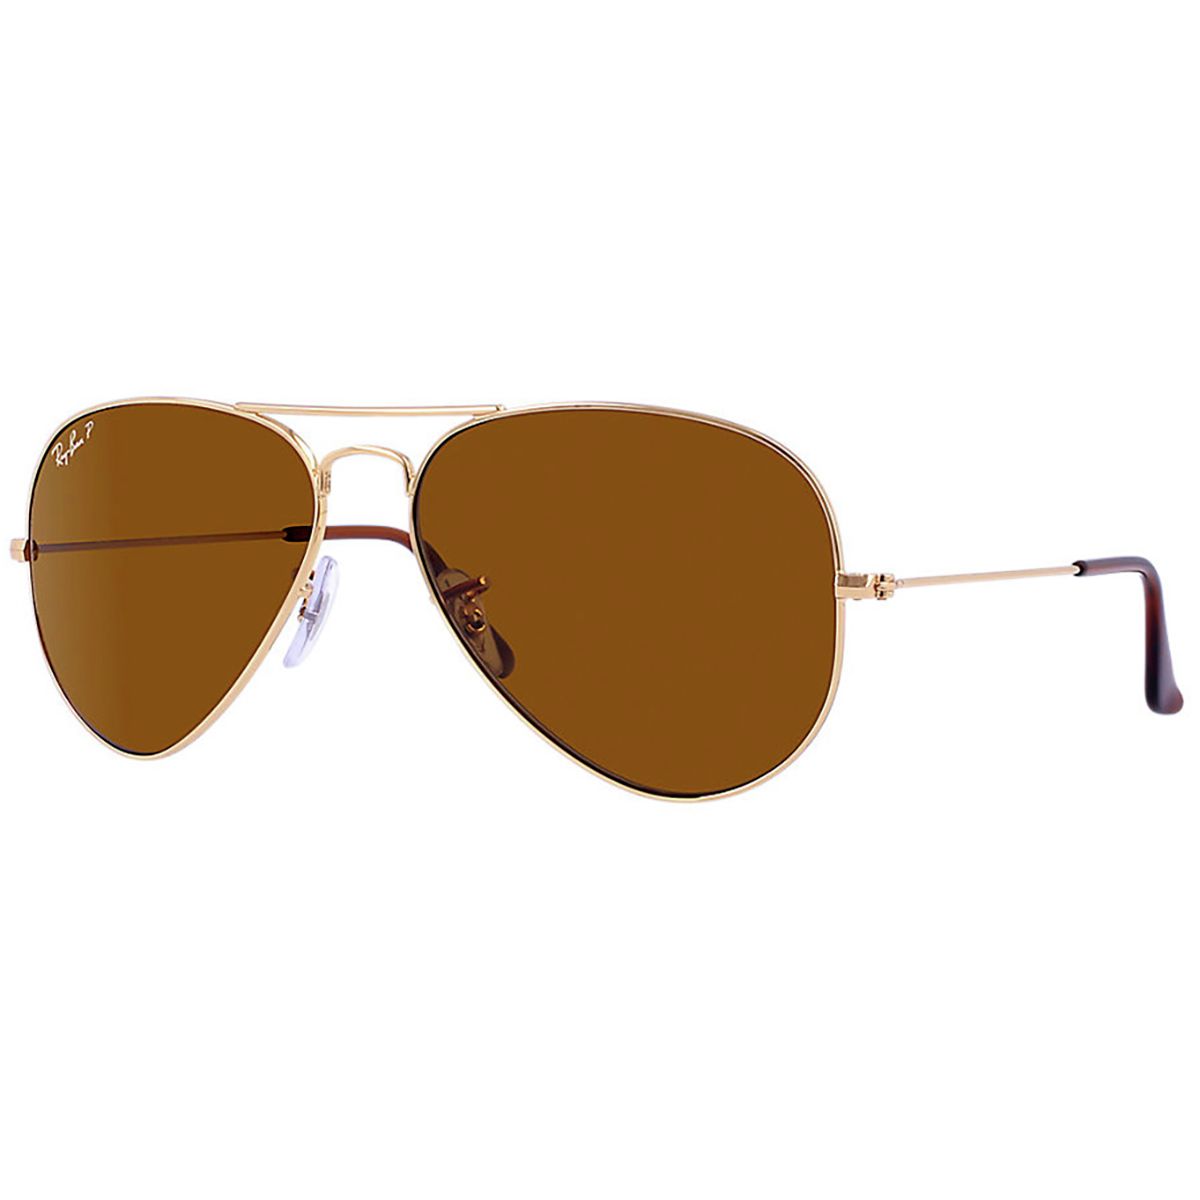 Ray-Ban Aviator Large Metal Sunglasses - Polarized Arista/Crystal Brown Polarized, L